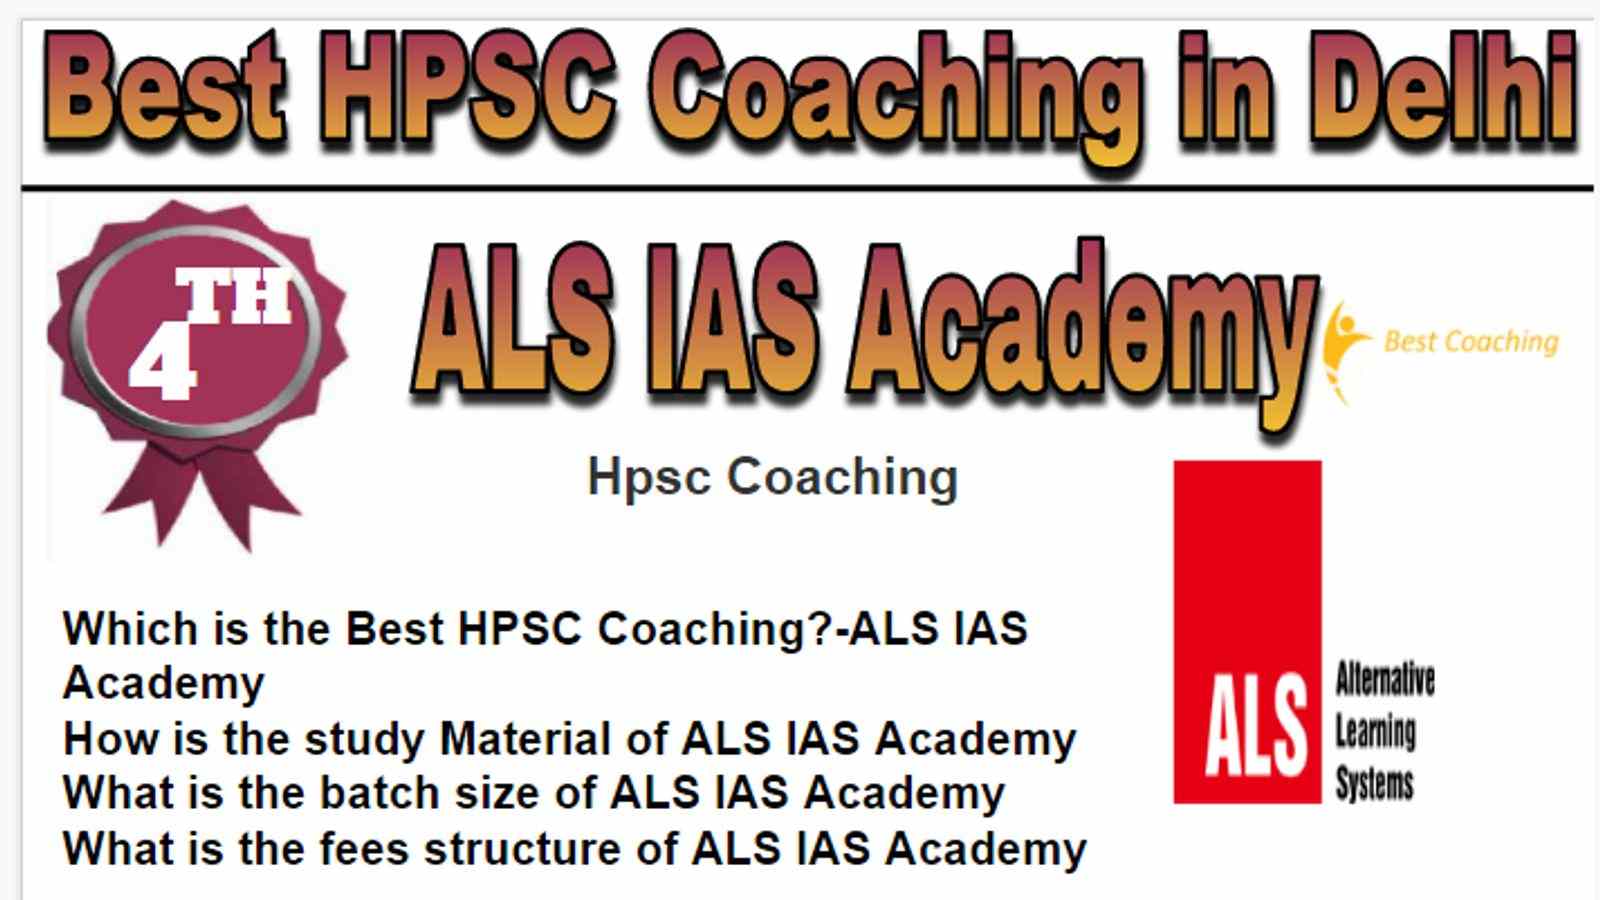 Rank 4 Best Hpsc Coaching in Delhi